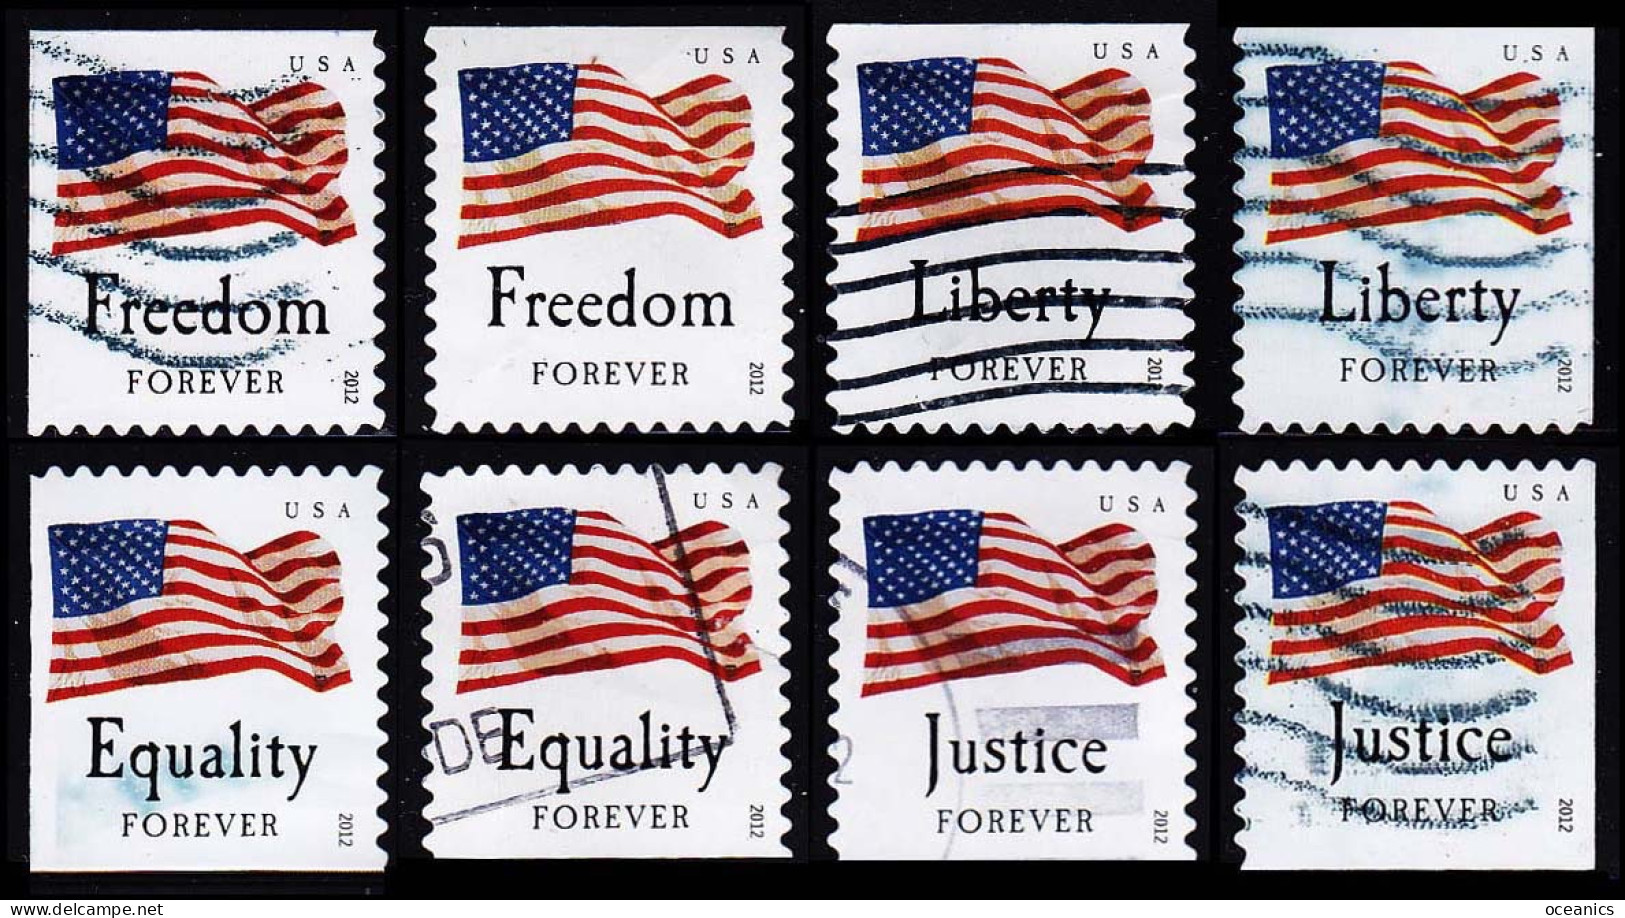 Etats-Unis / United States (Scott No.4645-48 - Drapeau / US / Flag) (o) Booklet All 8 Position - Gebruikt